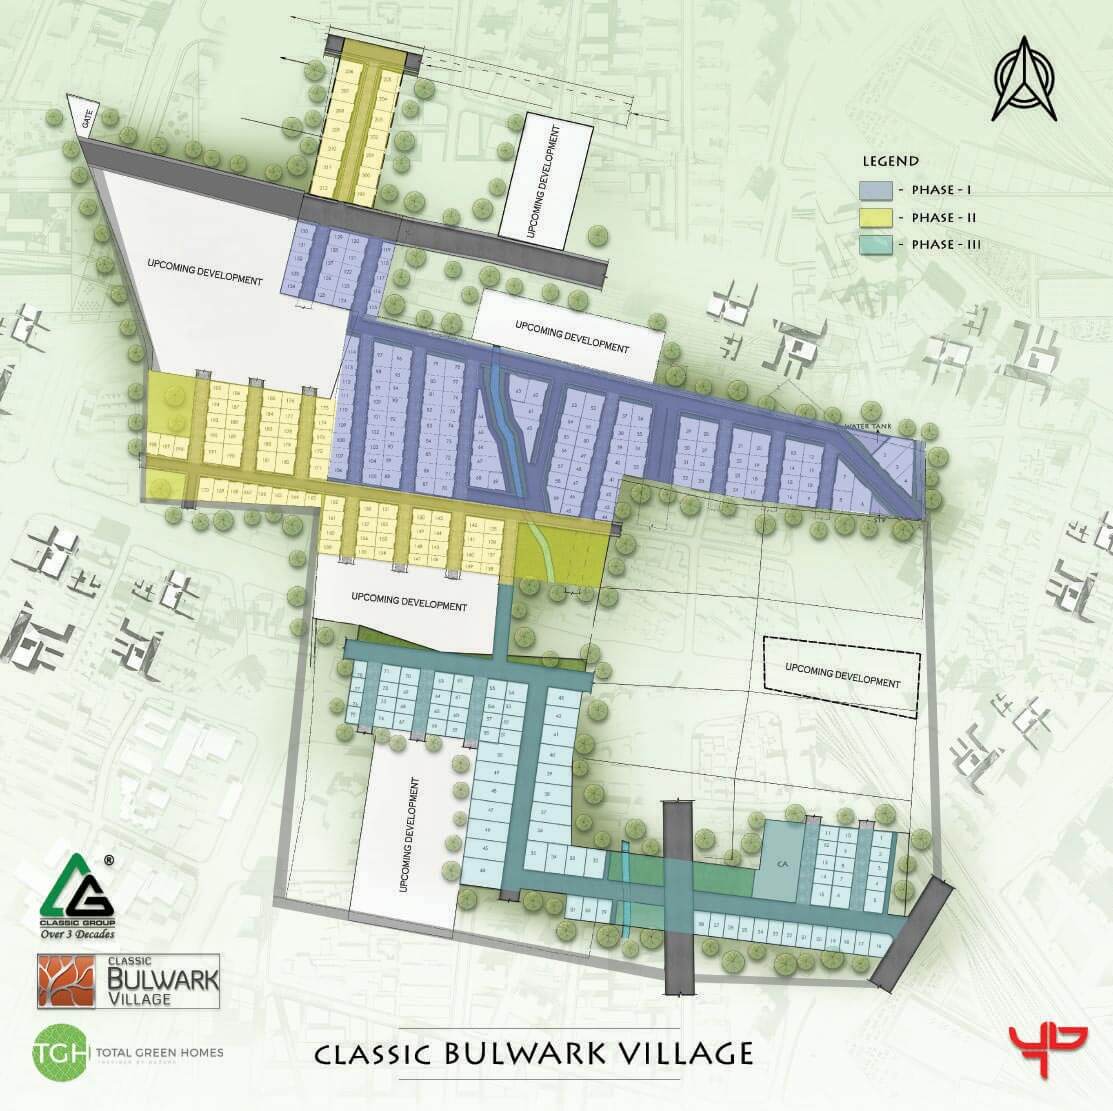 Tgh Classic Bulwark Village Master Plan